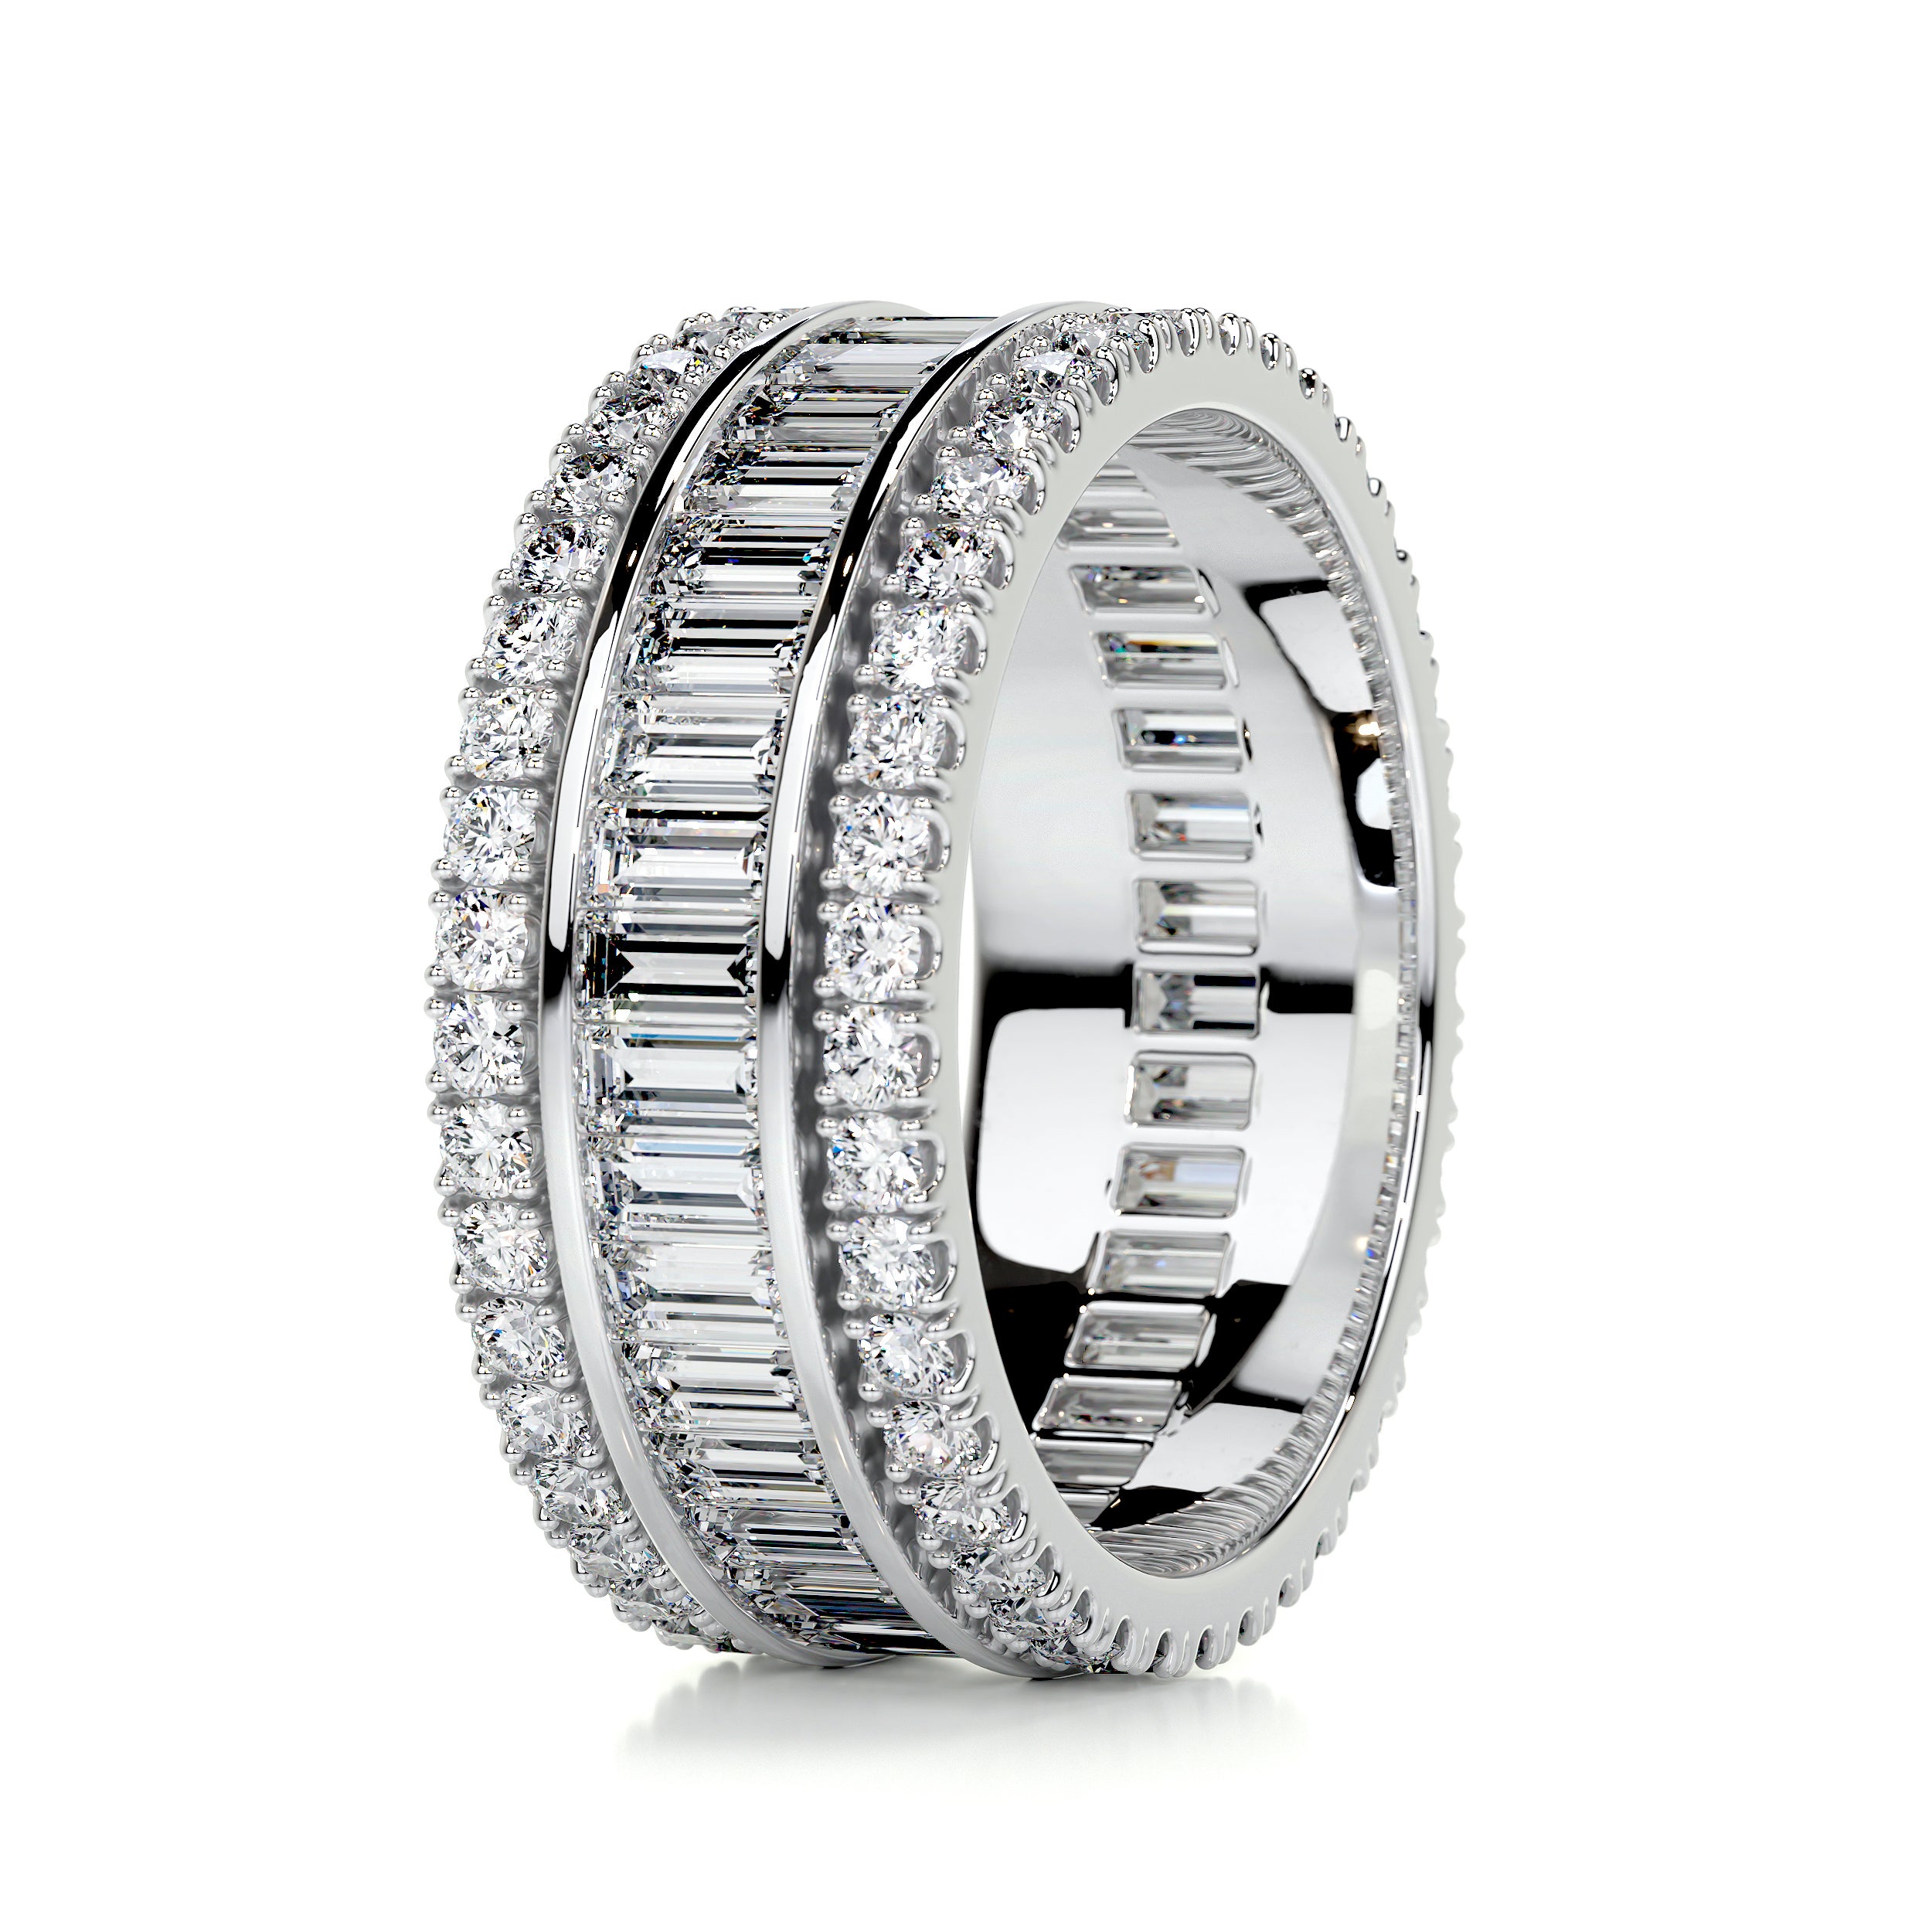 Paige Eternity Wedding Ring   (4 Carat) -18K White Gold